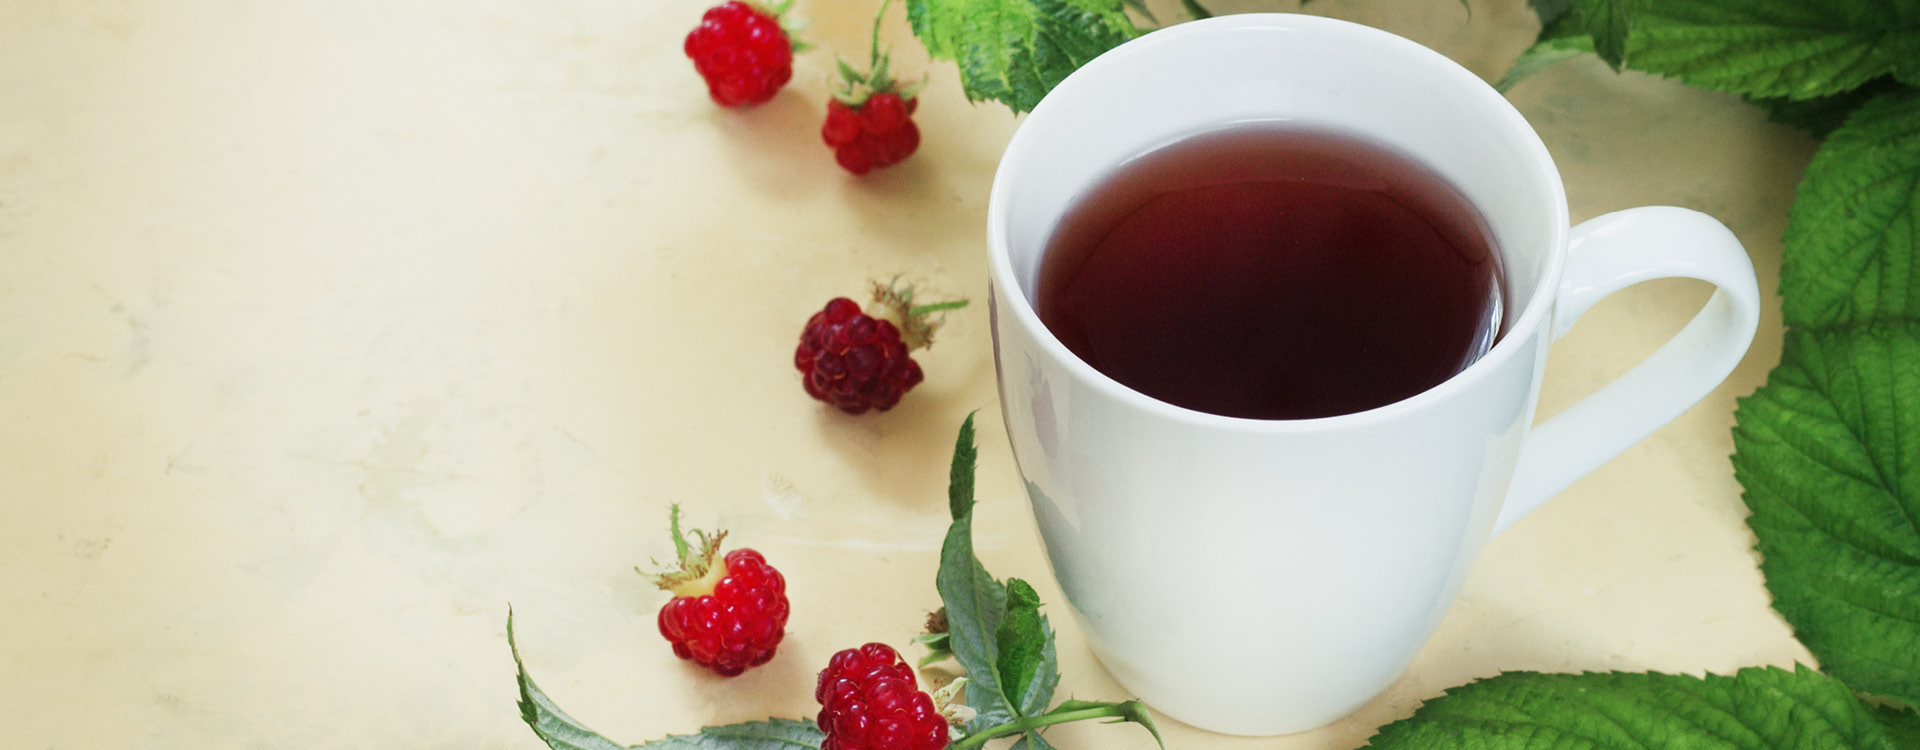 Red Raspberry Leaf Tea Recipes How To Make Them